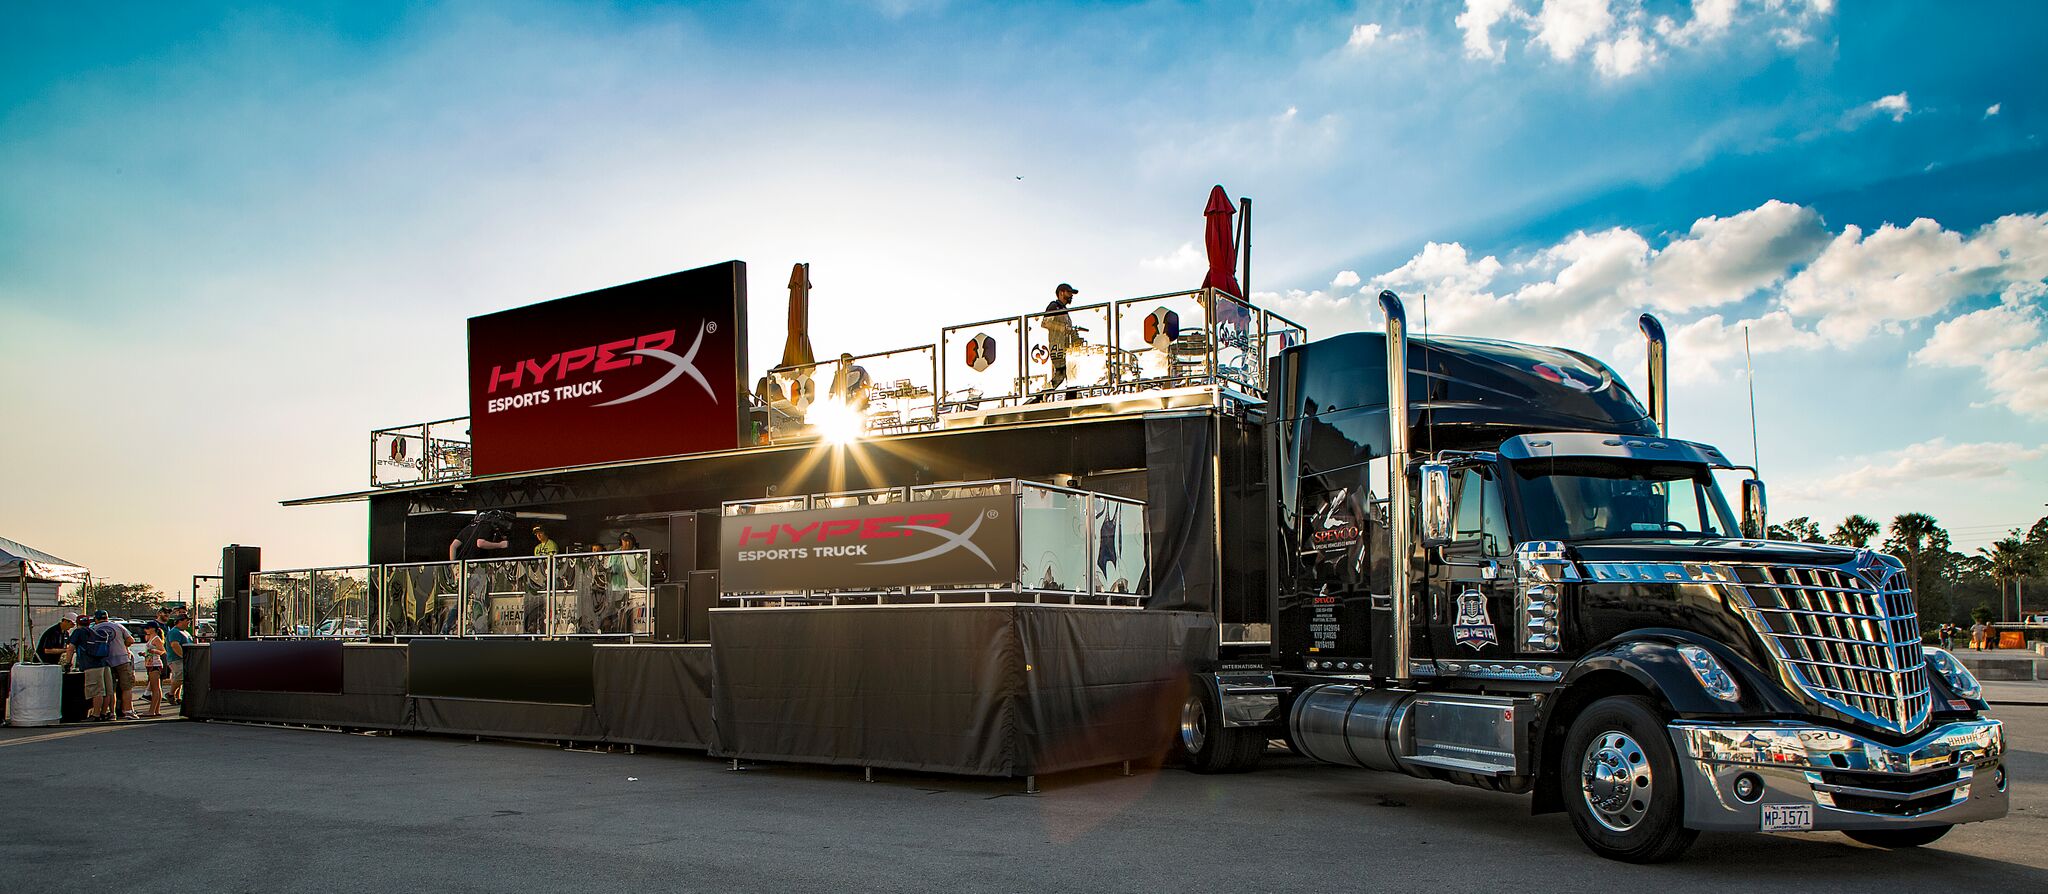 HyperX เปิดตัวรถ Esports Truck ใหม่ ในช่วงงาน CES 2019